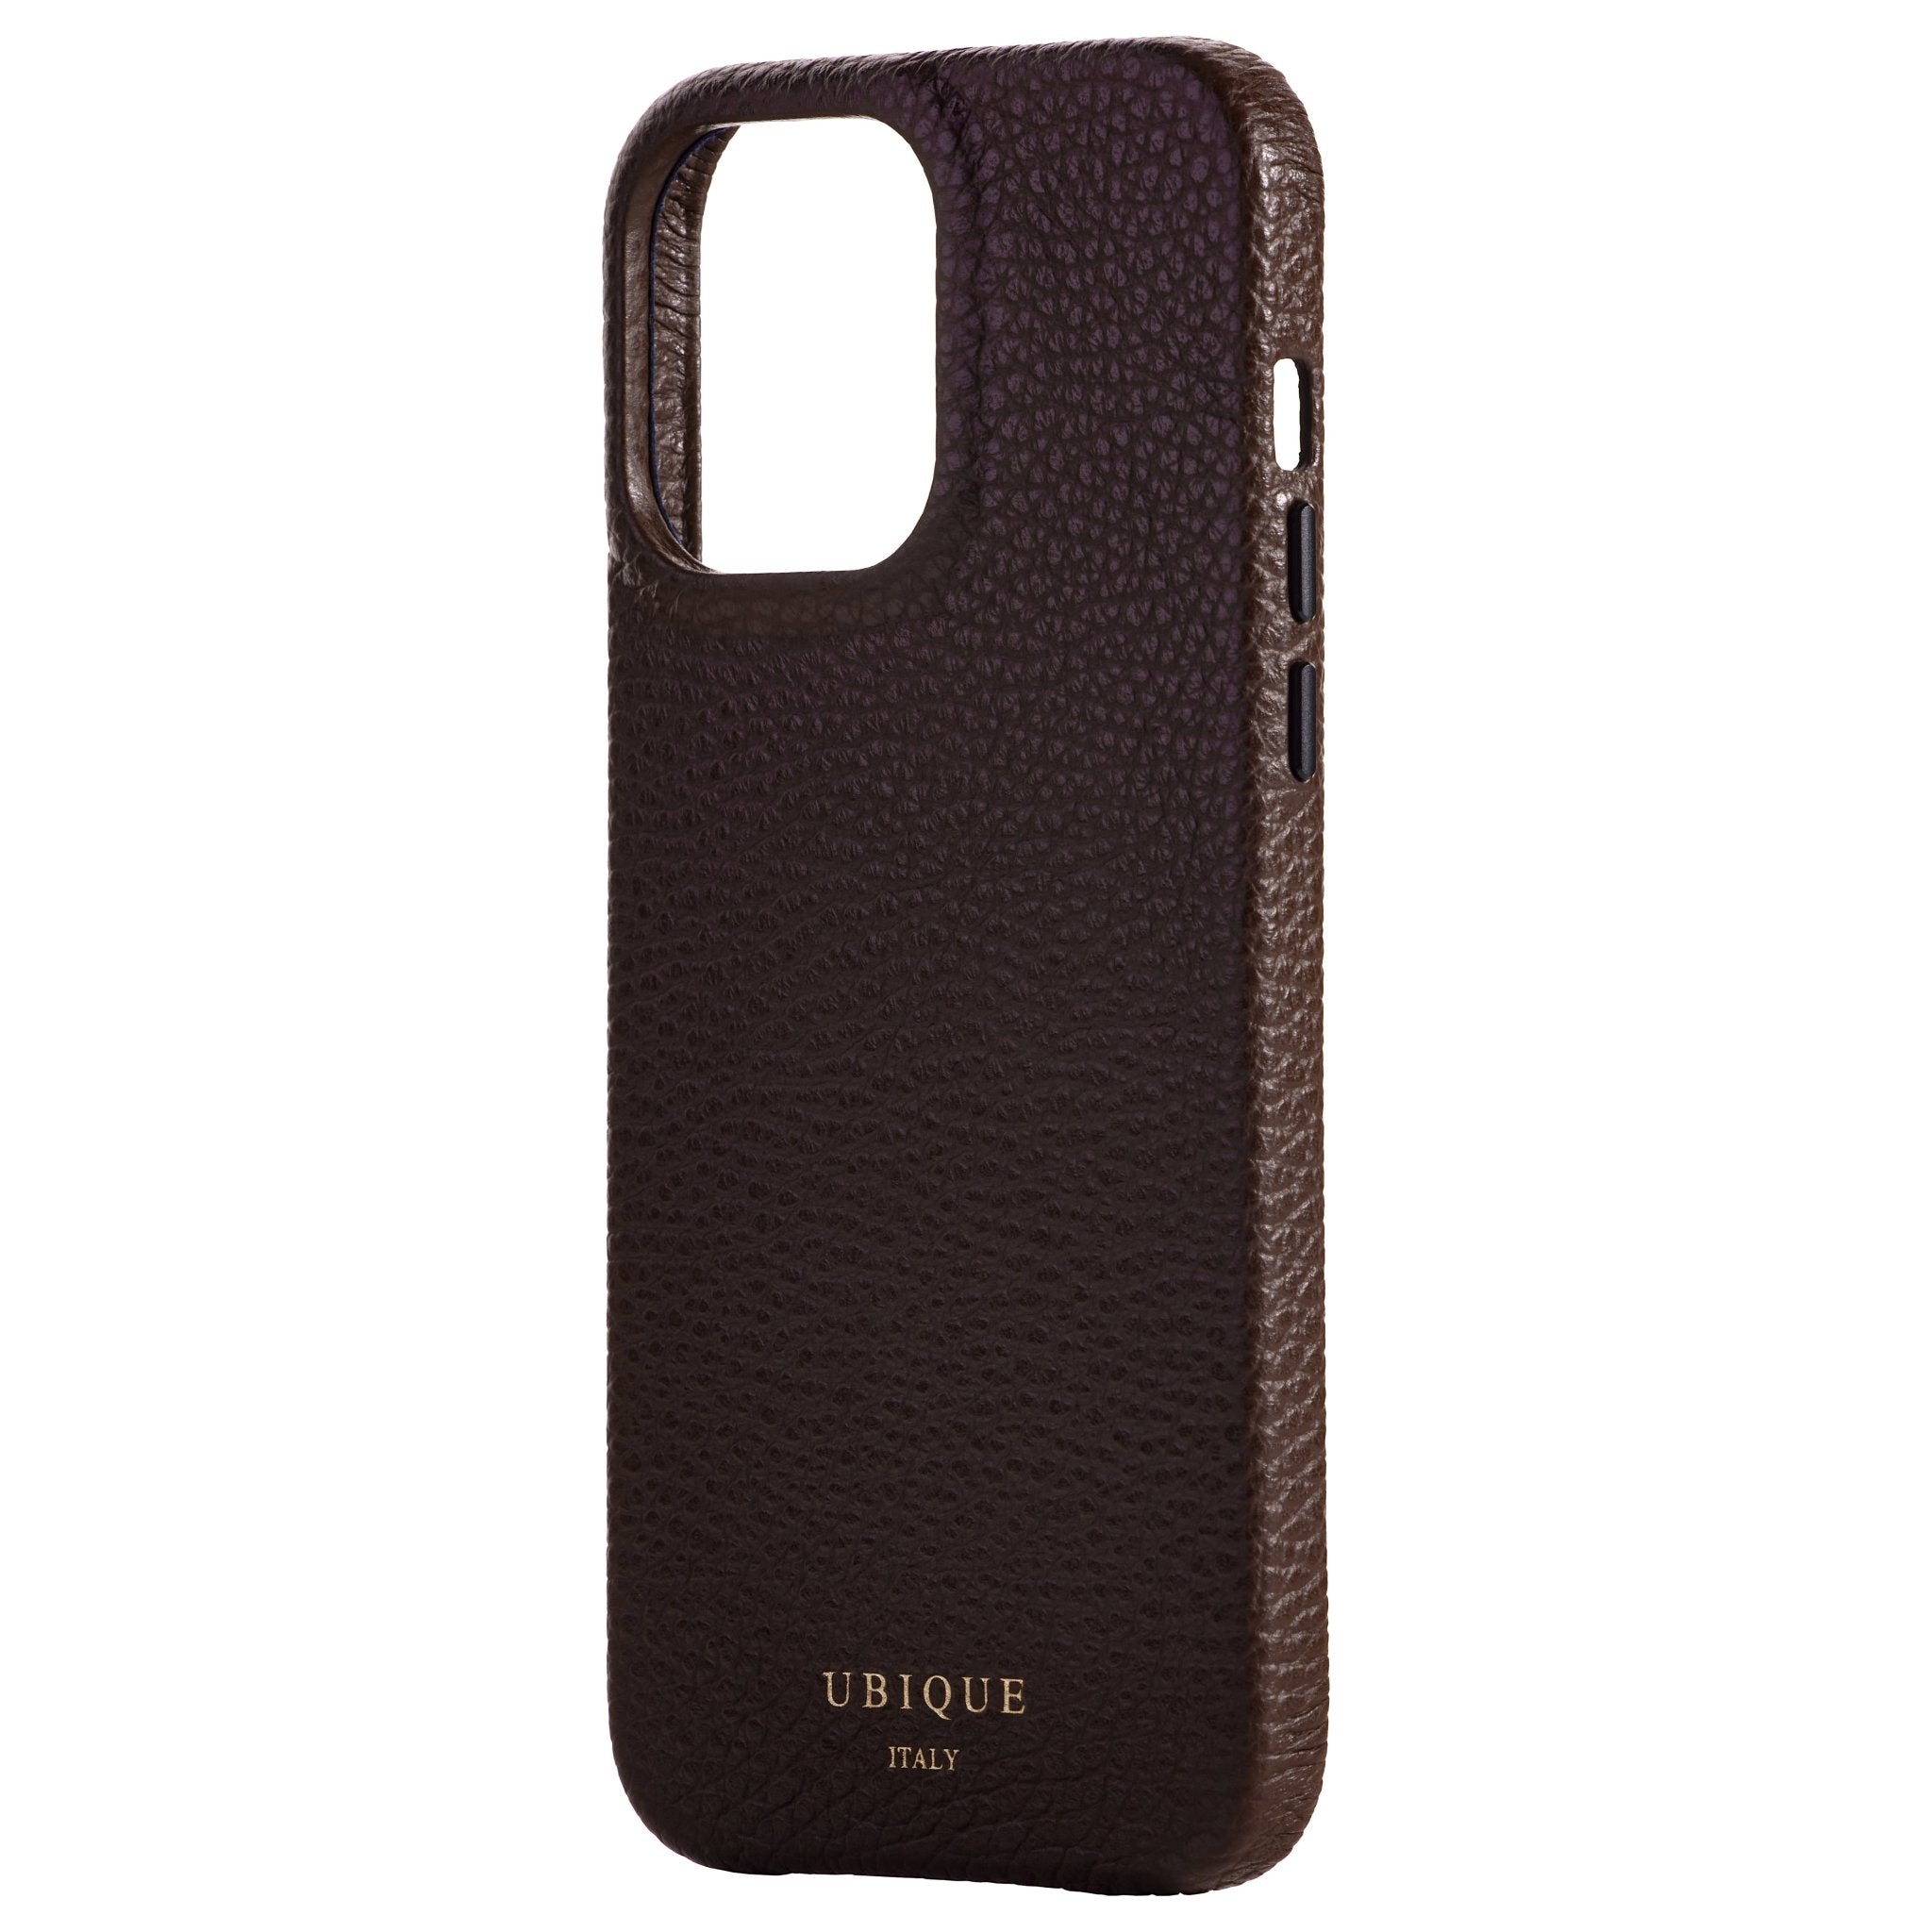 Ubique Italy Luxury iPhone Case 14 Pro Max Pebble Grain Leather Dark Walnut Angled